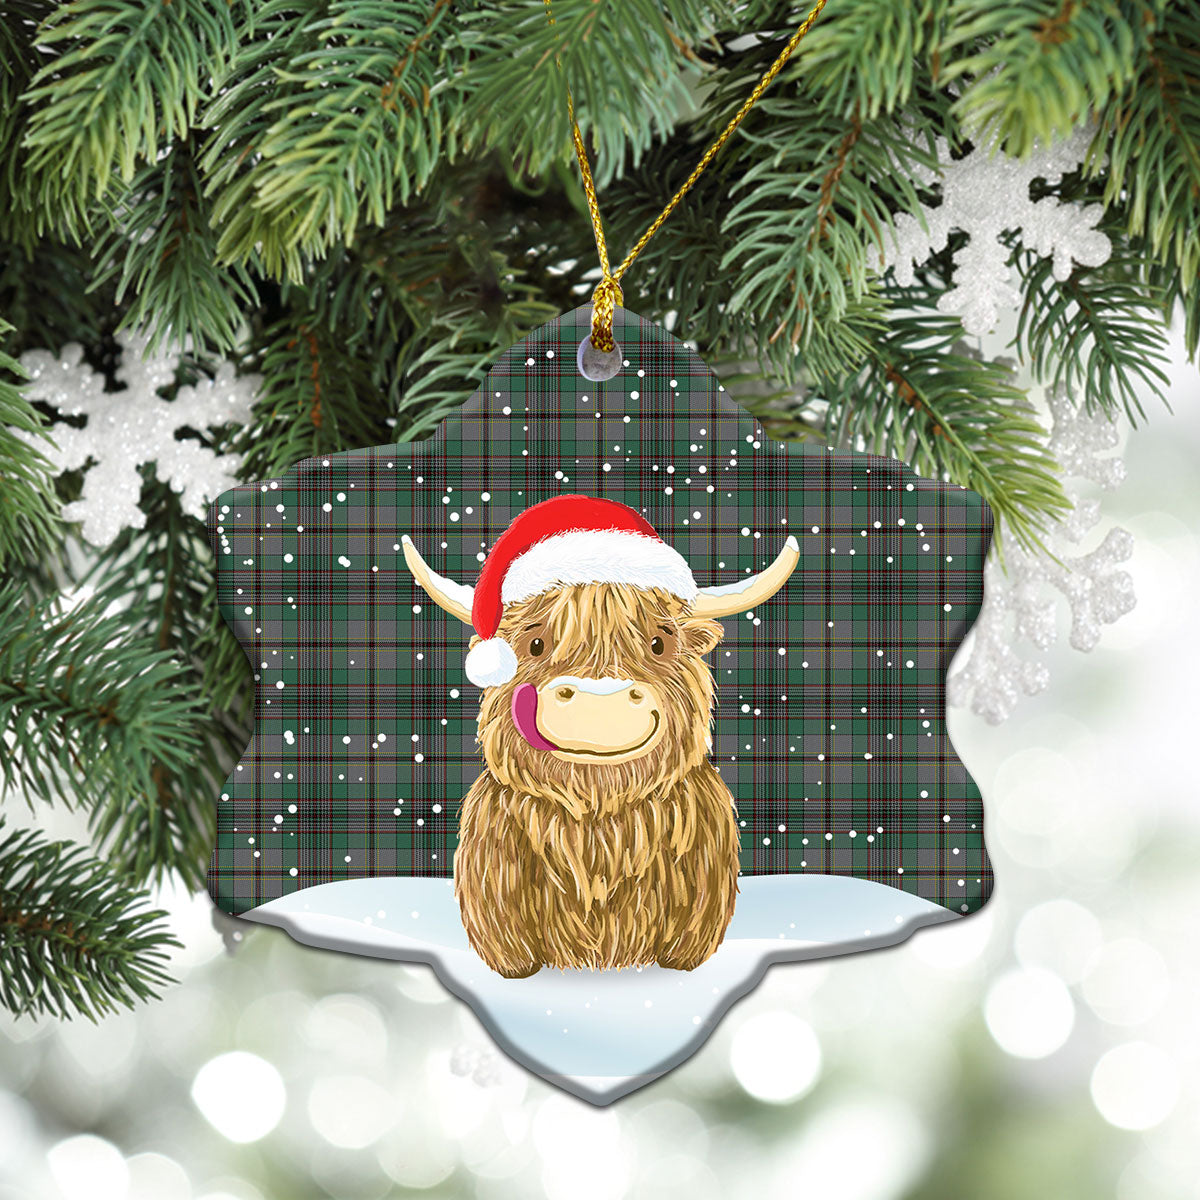 Craig Tartan Christmas Ceramic Ornament - Highland Cows Style